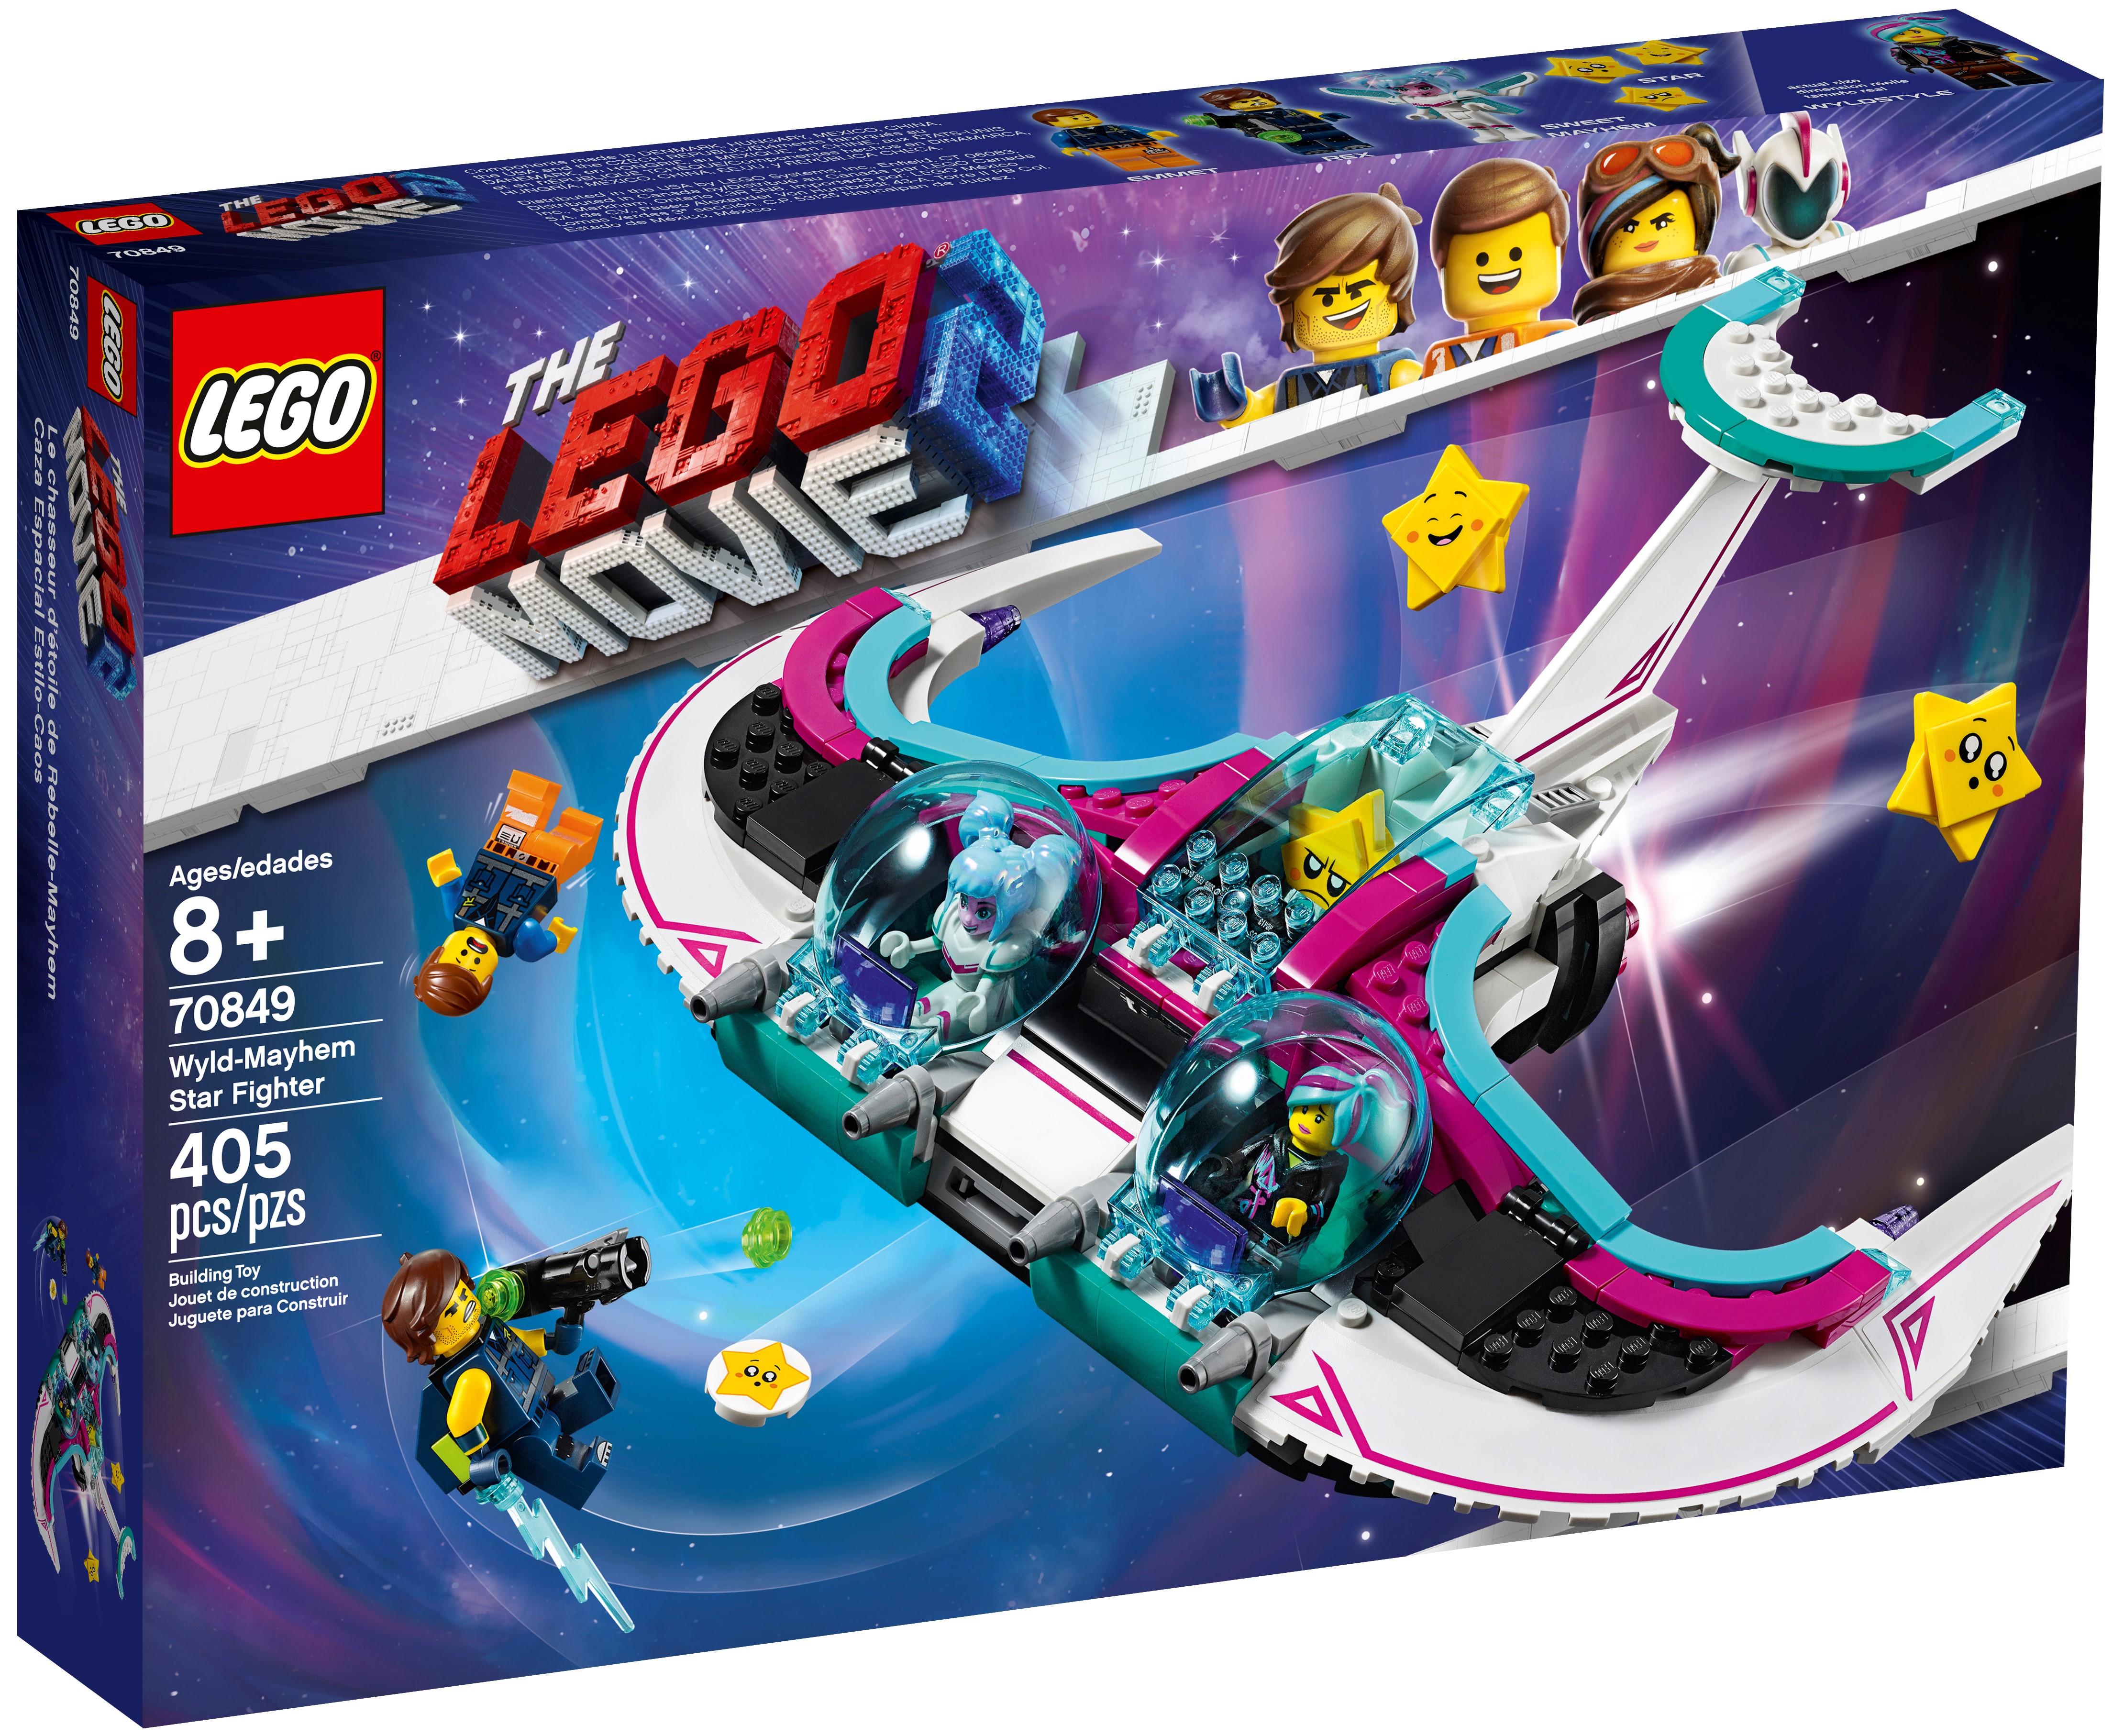 Lego 70849 The Lego Movie 2 Wyld-Mayhem Star Fighter New Exclusive Spaceship Set